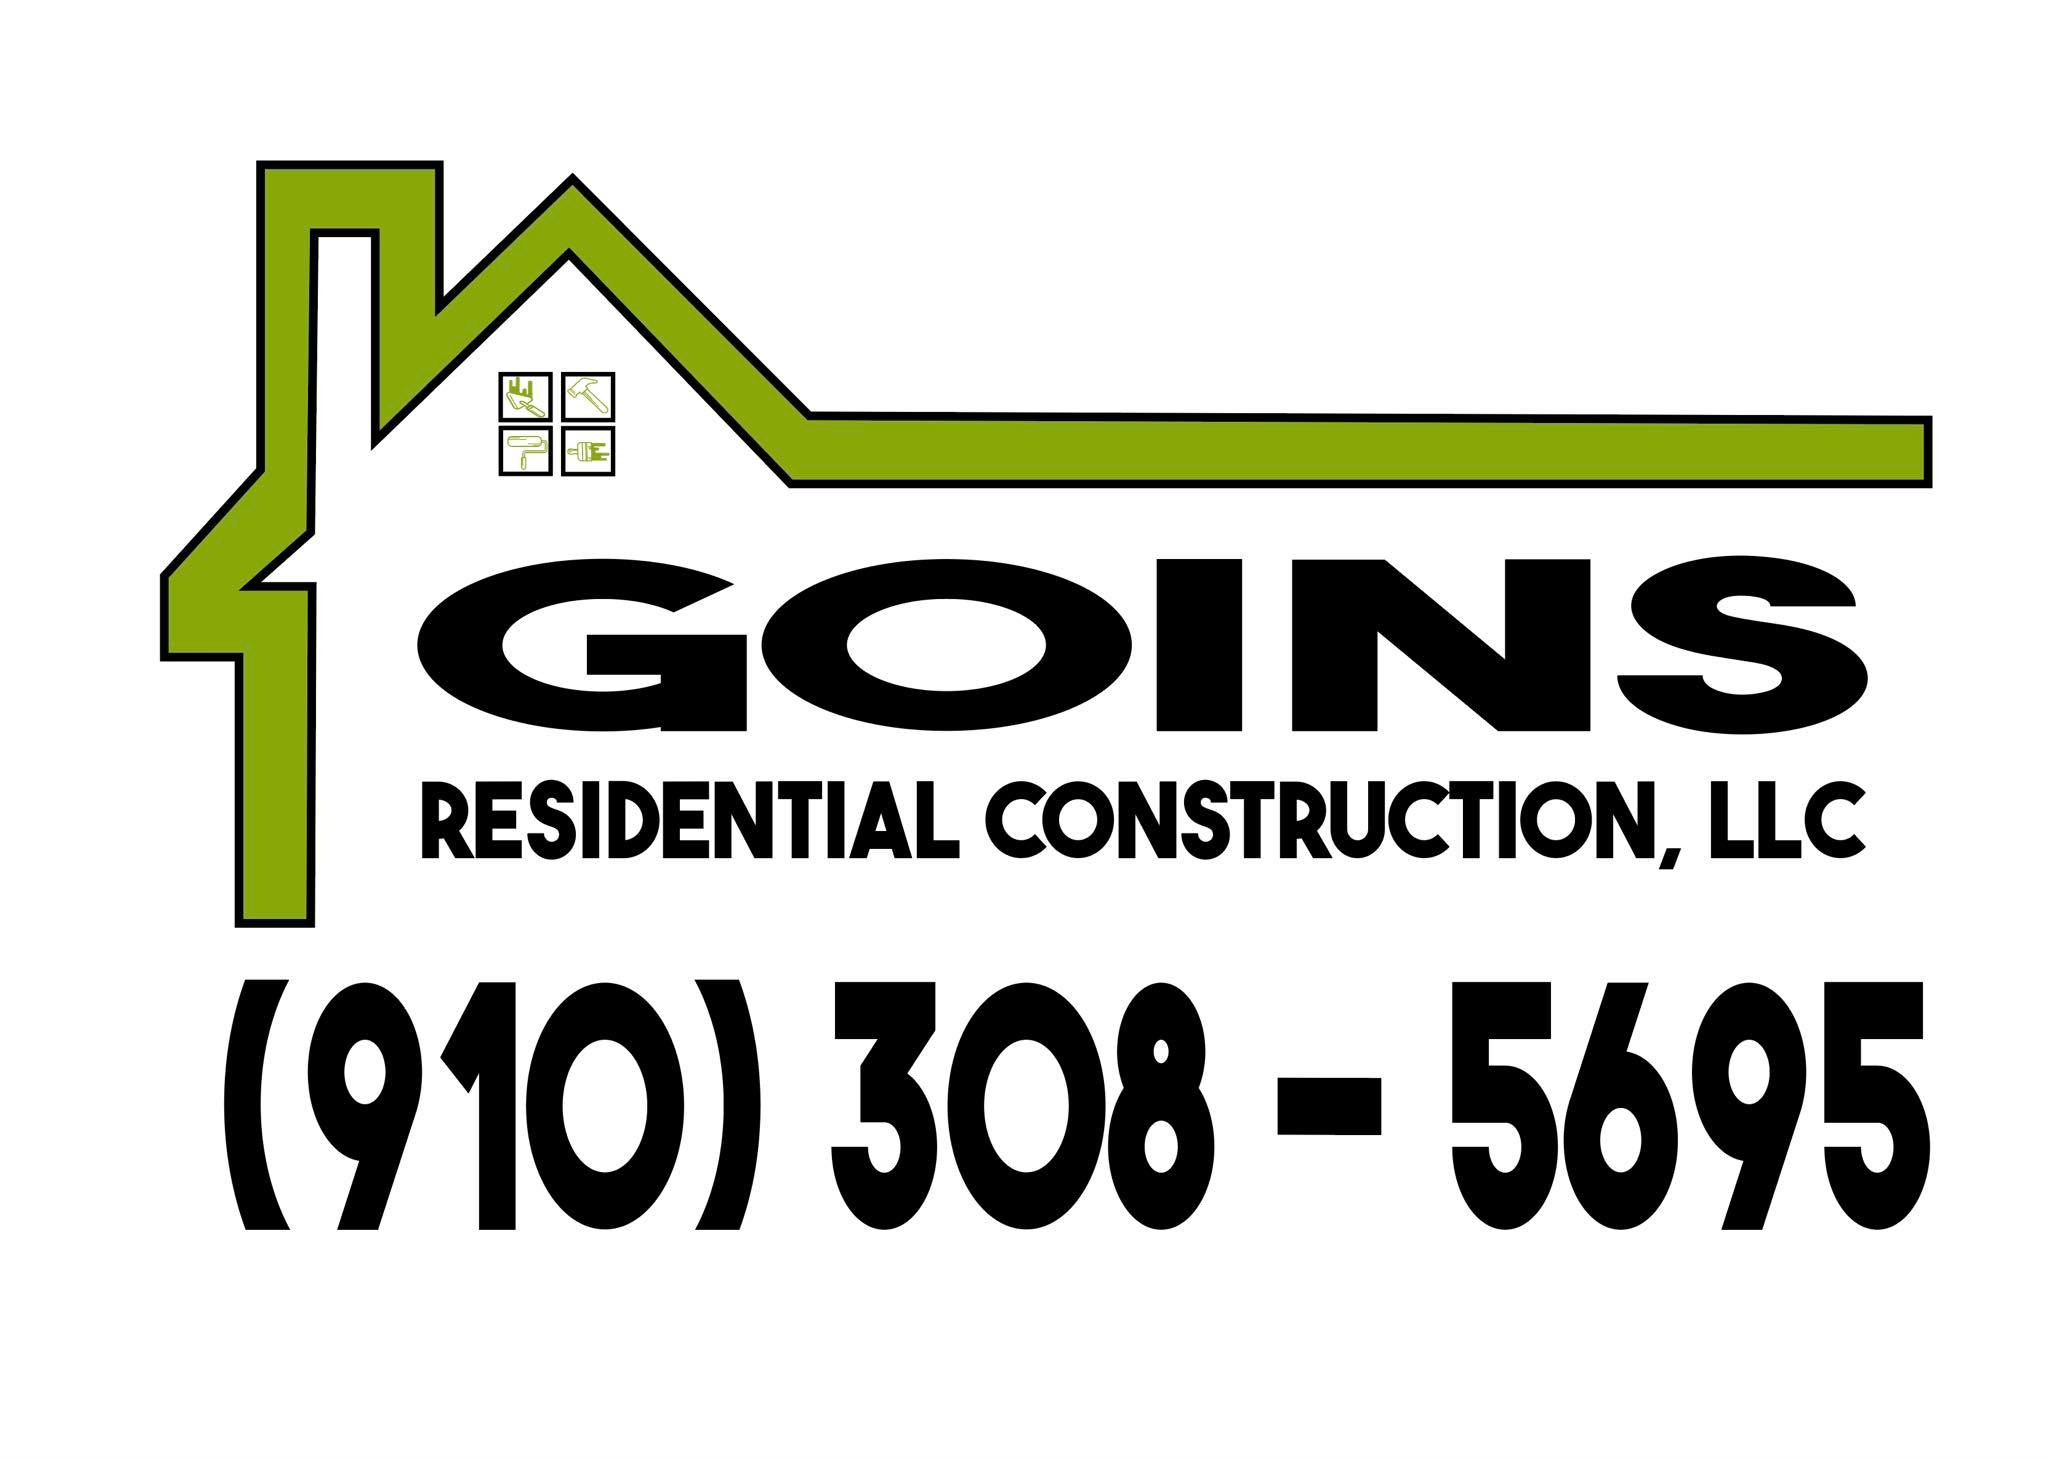 Goins Residential Construction LLC